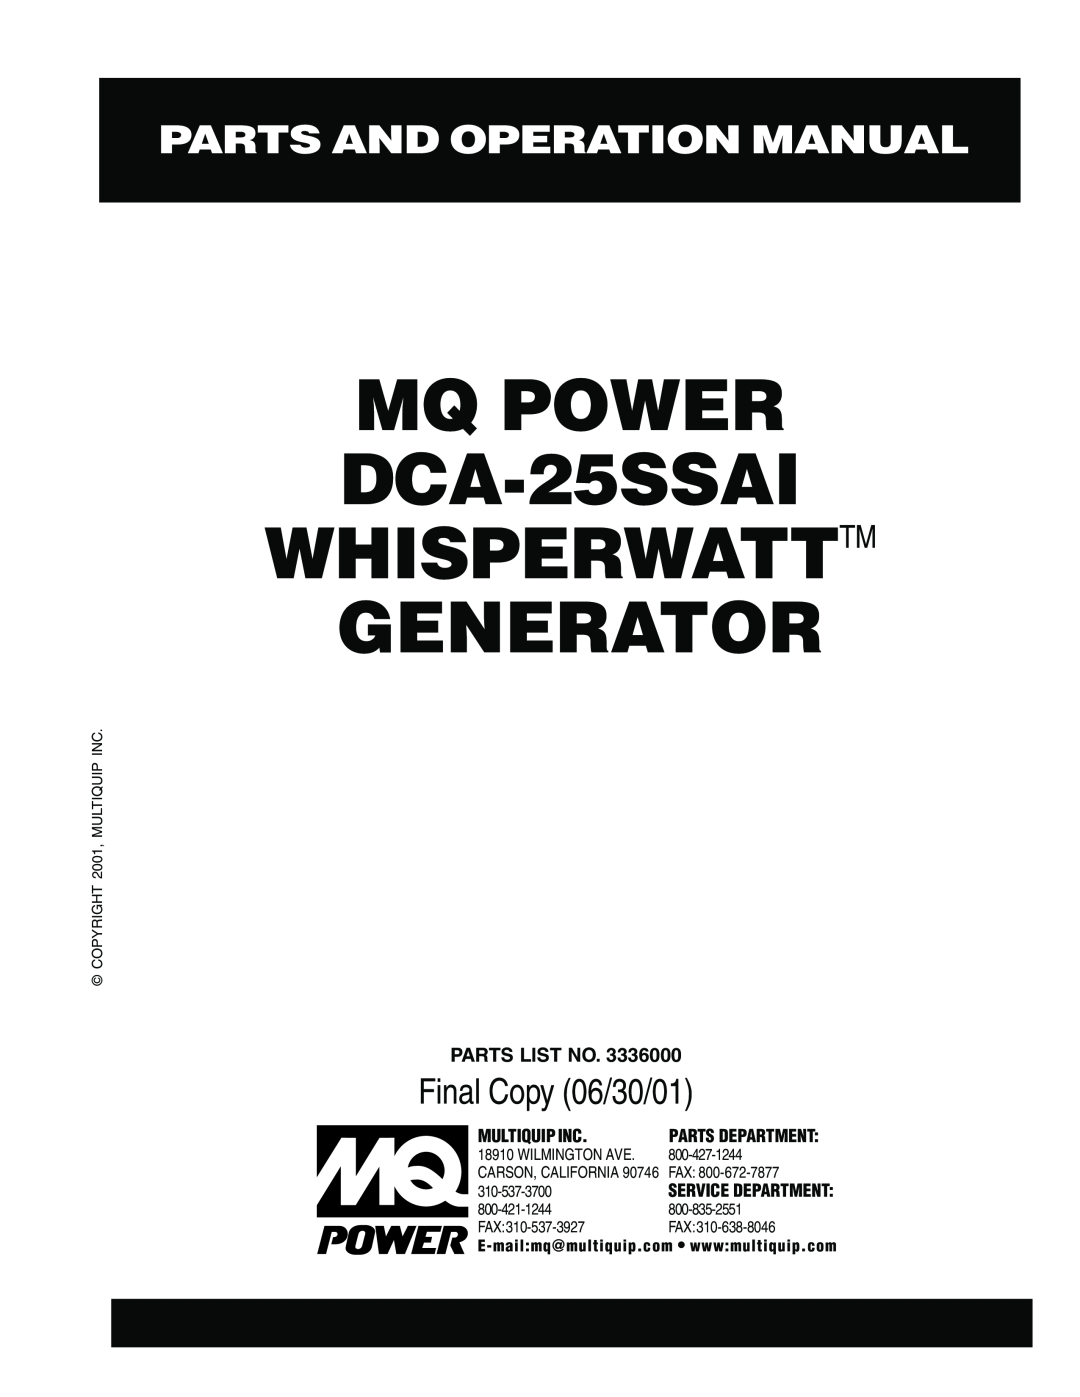 Multiquip operation manual Parts And Operation Manual, MQ POWER DCA-25SSAI WHISPERWATTTM GENERATOR, Final Copy 06/30/01 